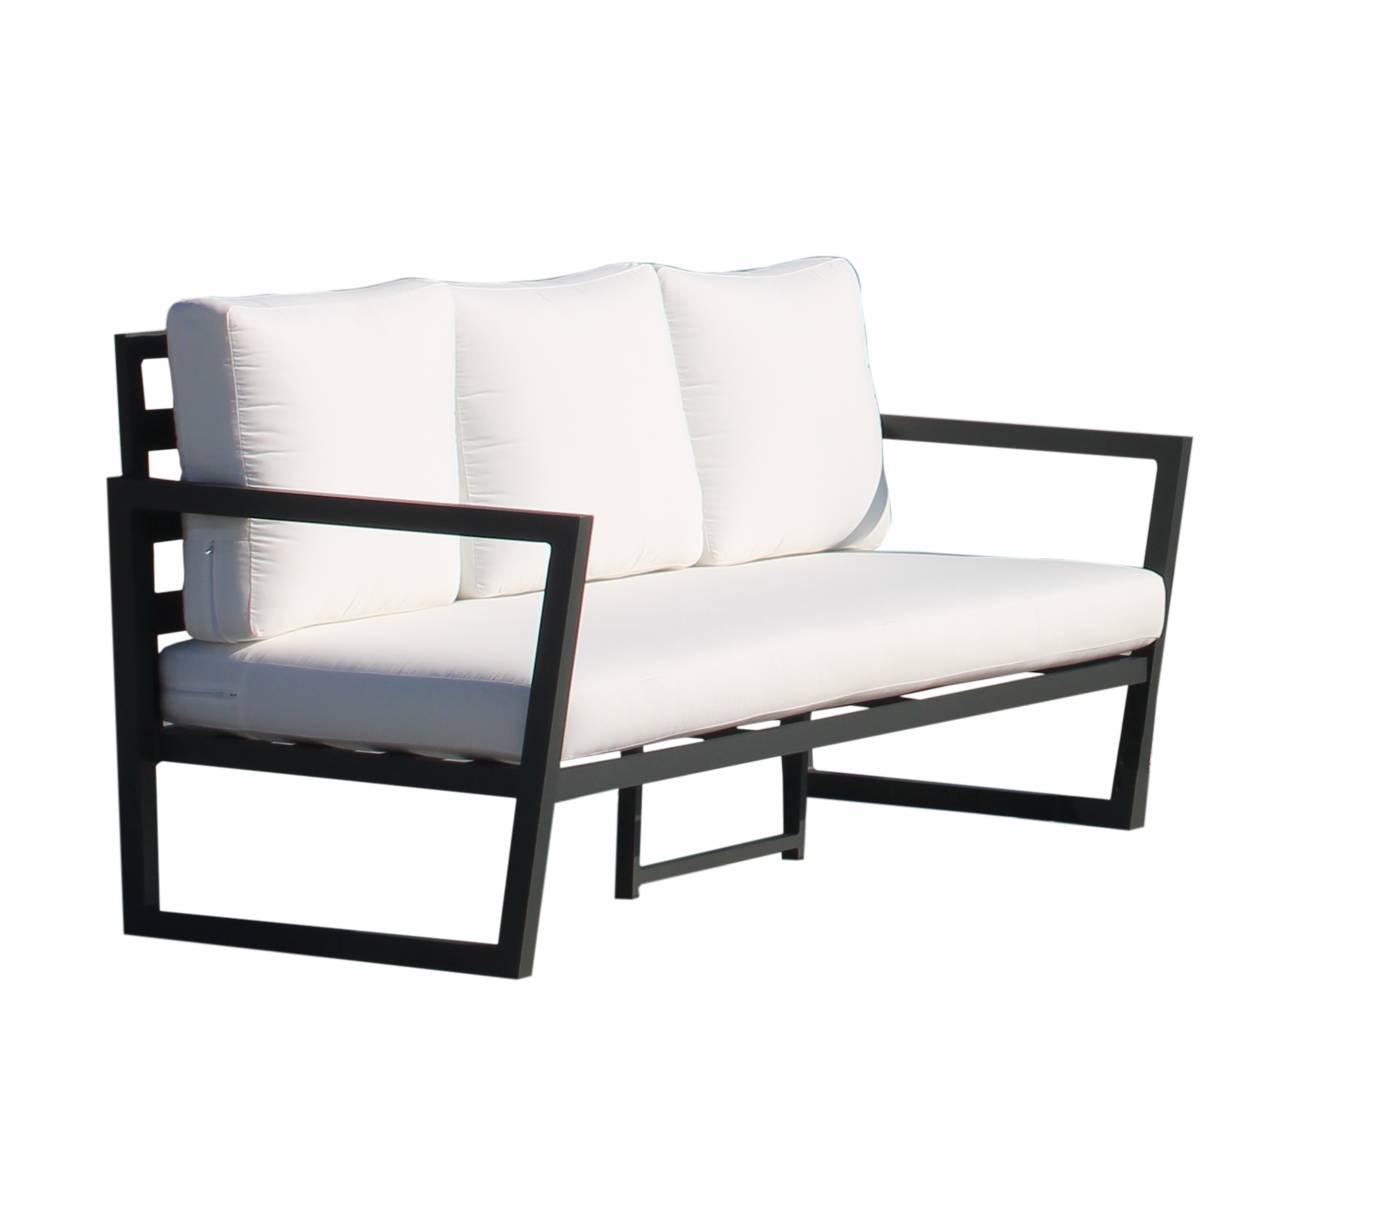 Set Aluminio Alpine-10 - Conjunto de aluminio para exterior: sofá 3 plazas + 2 sillones + mesa de centro + 2 taburetes. Disponible en color blanco, antracita, champagne, plata o marrón..